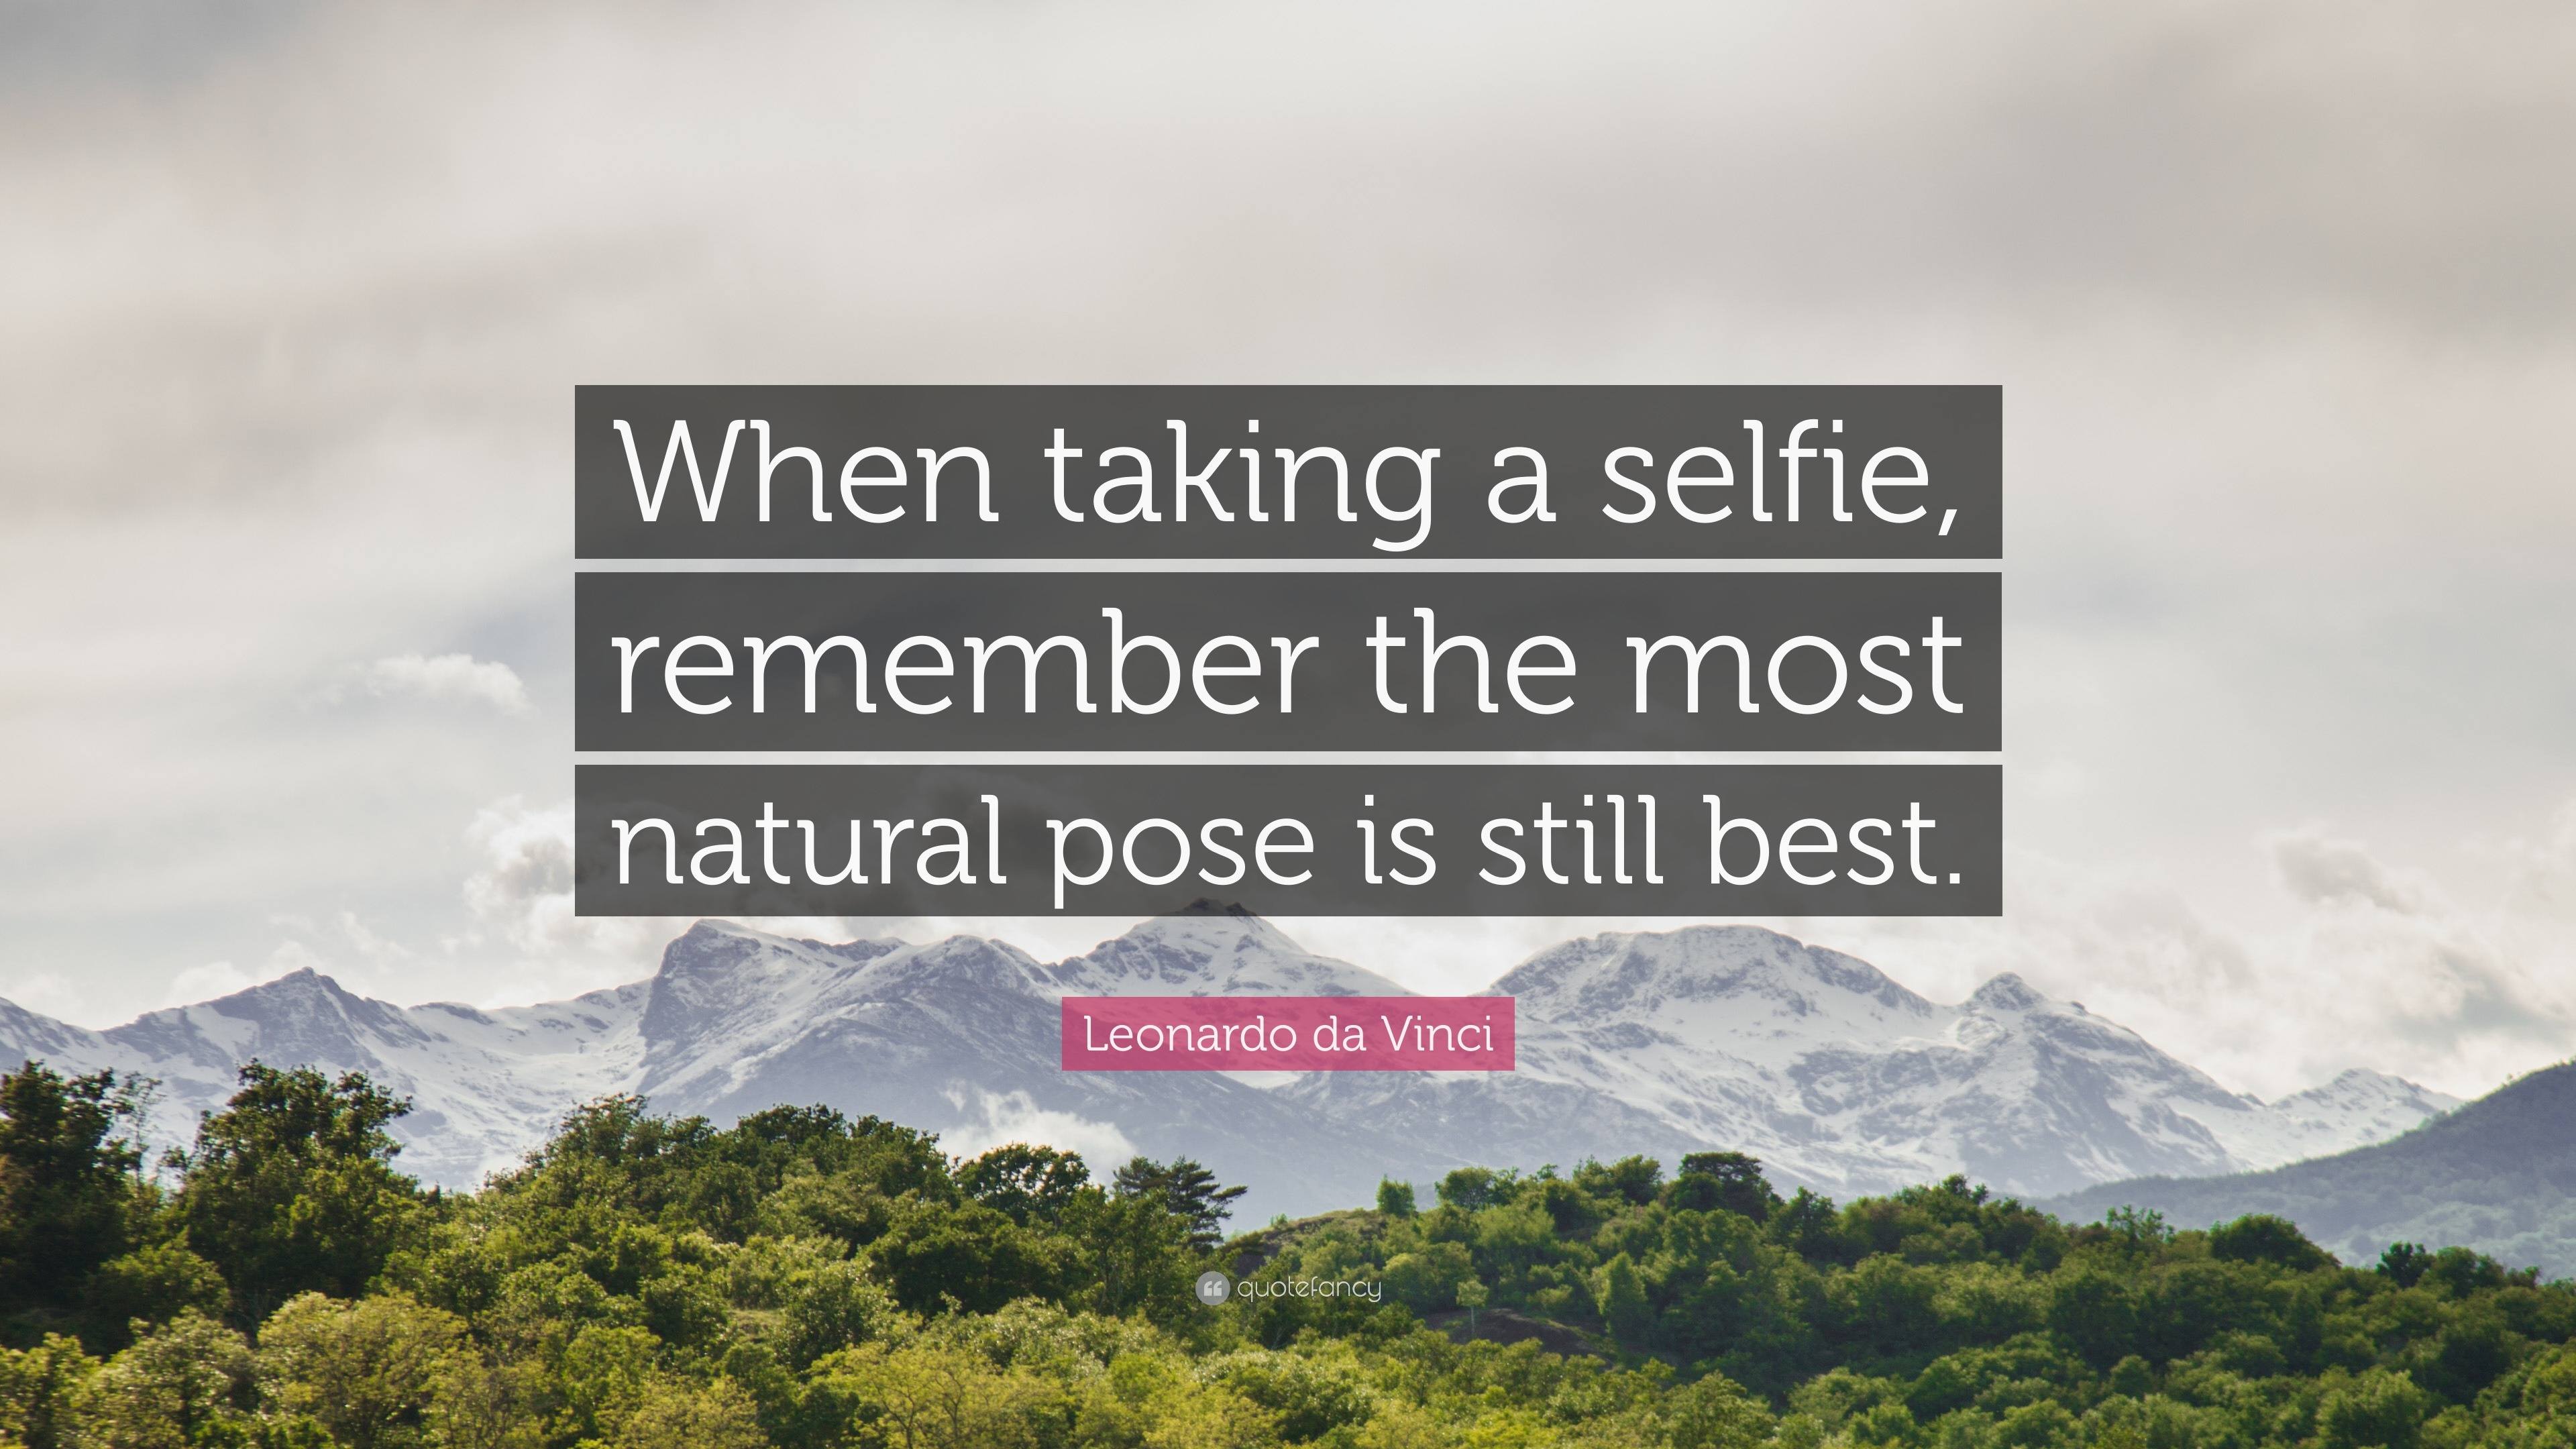 Selfie Captions - Selfie Status Quotes for Instagram & Facebook